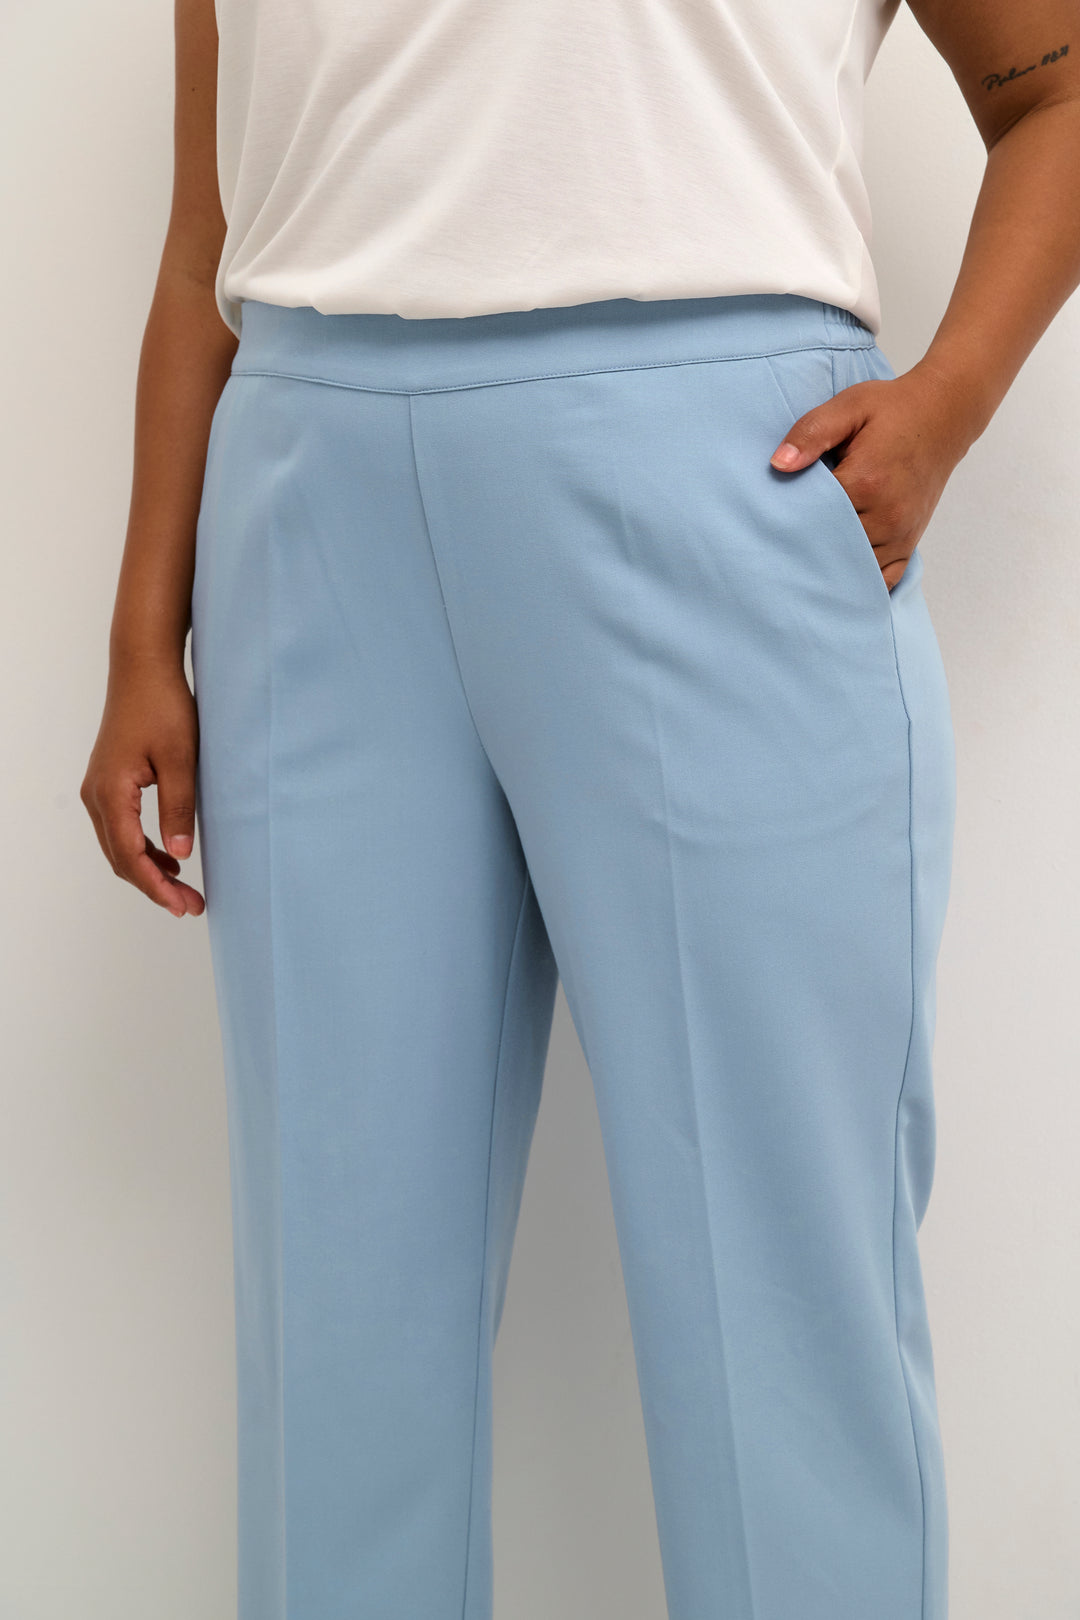 lichtblauwe cropped broek - kaffe curve - - grote maten - dameskleding - kledingwinkel - herent - leuven